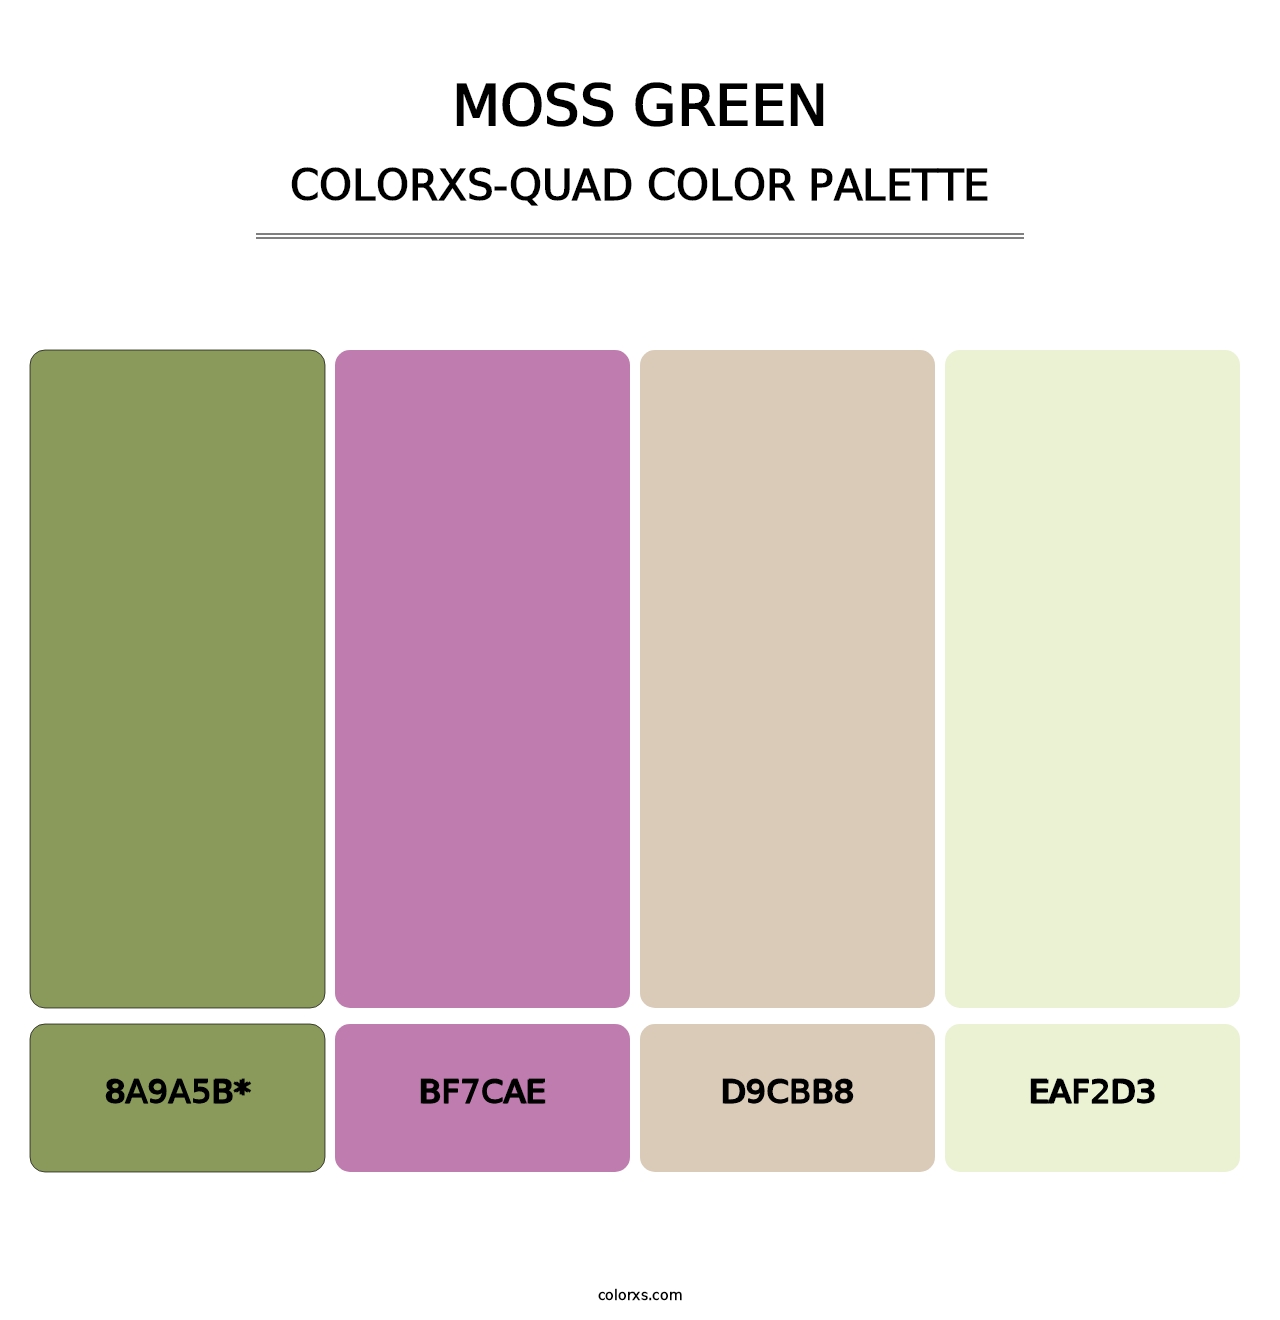 Moss Green - Colorxs Quad Palette